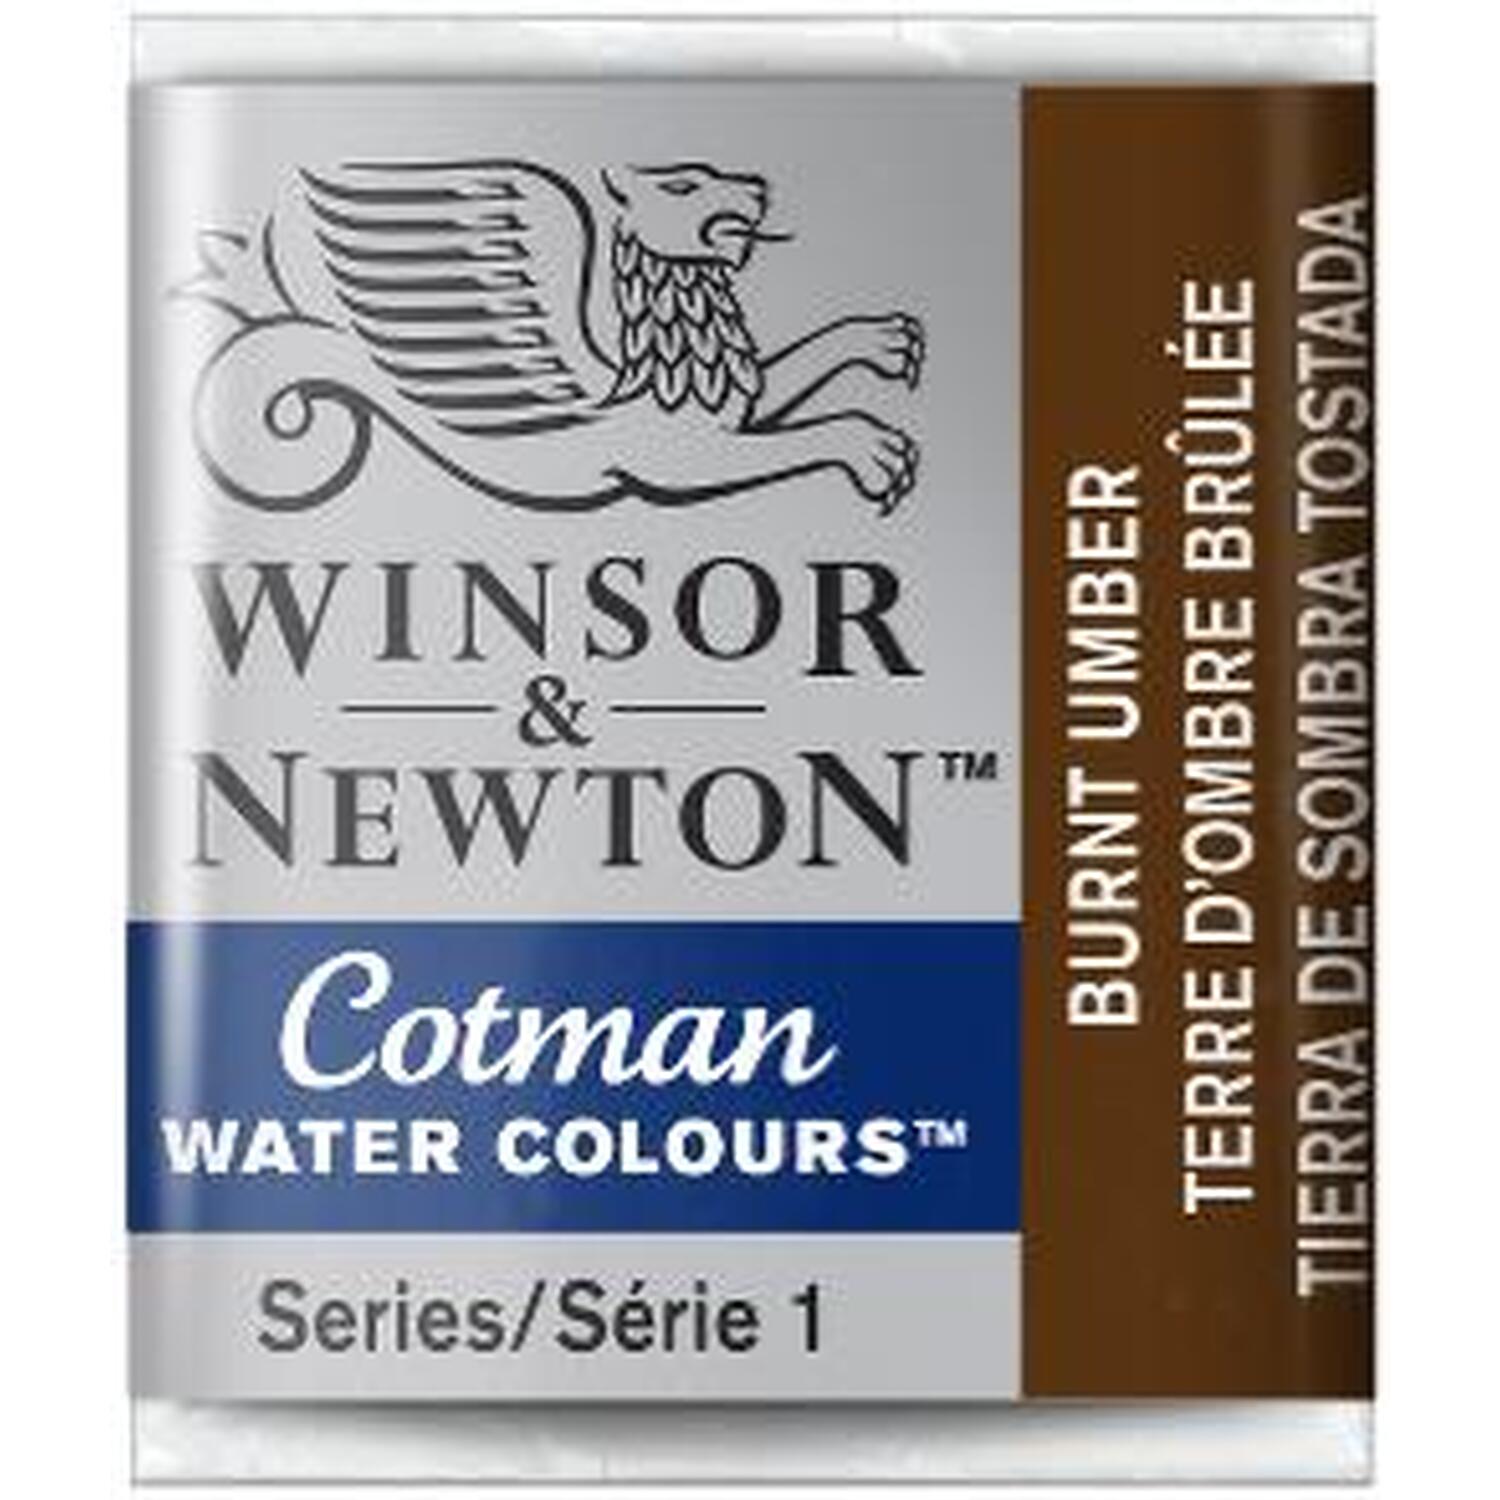 Winsor and Newton Cotman Watercolour Half Pan Paint - Burnt Umber Image